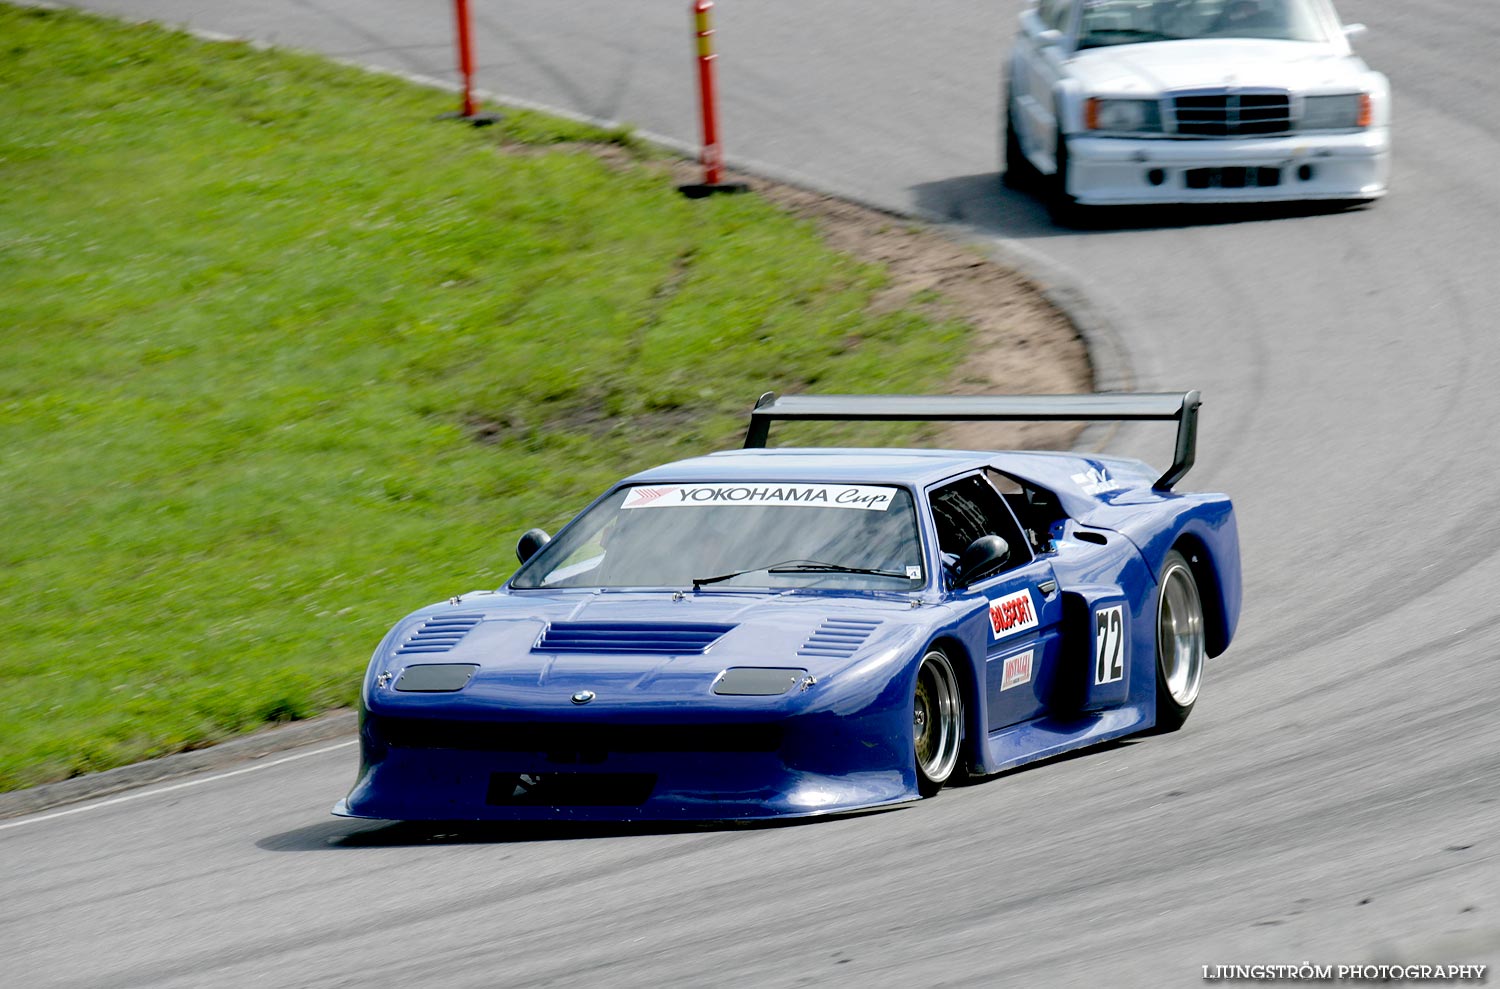 SSK Raceweek,mix,Kinnekulle Ring,Götene,Sverige,Motorsport,,2009,107533